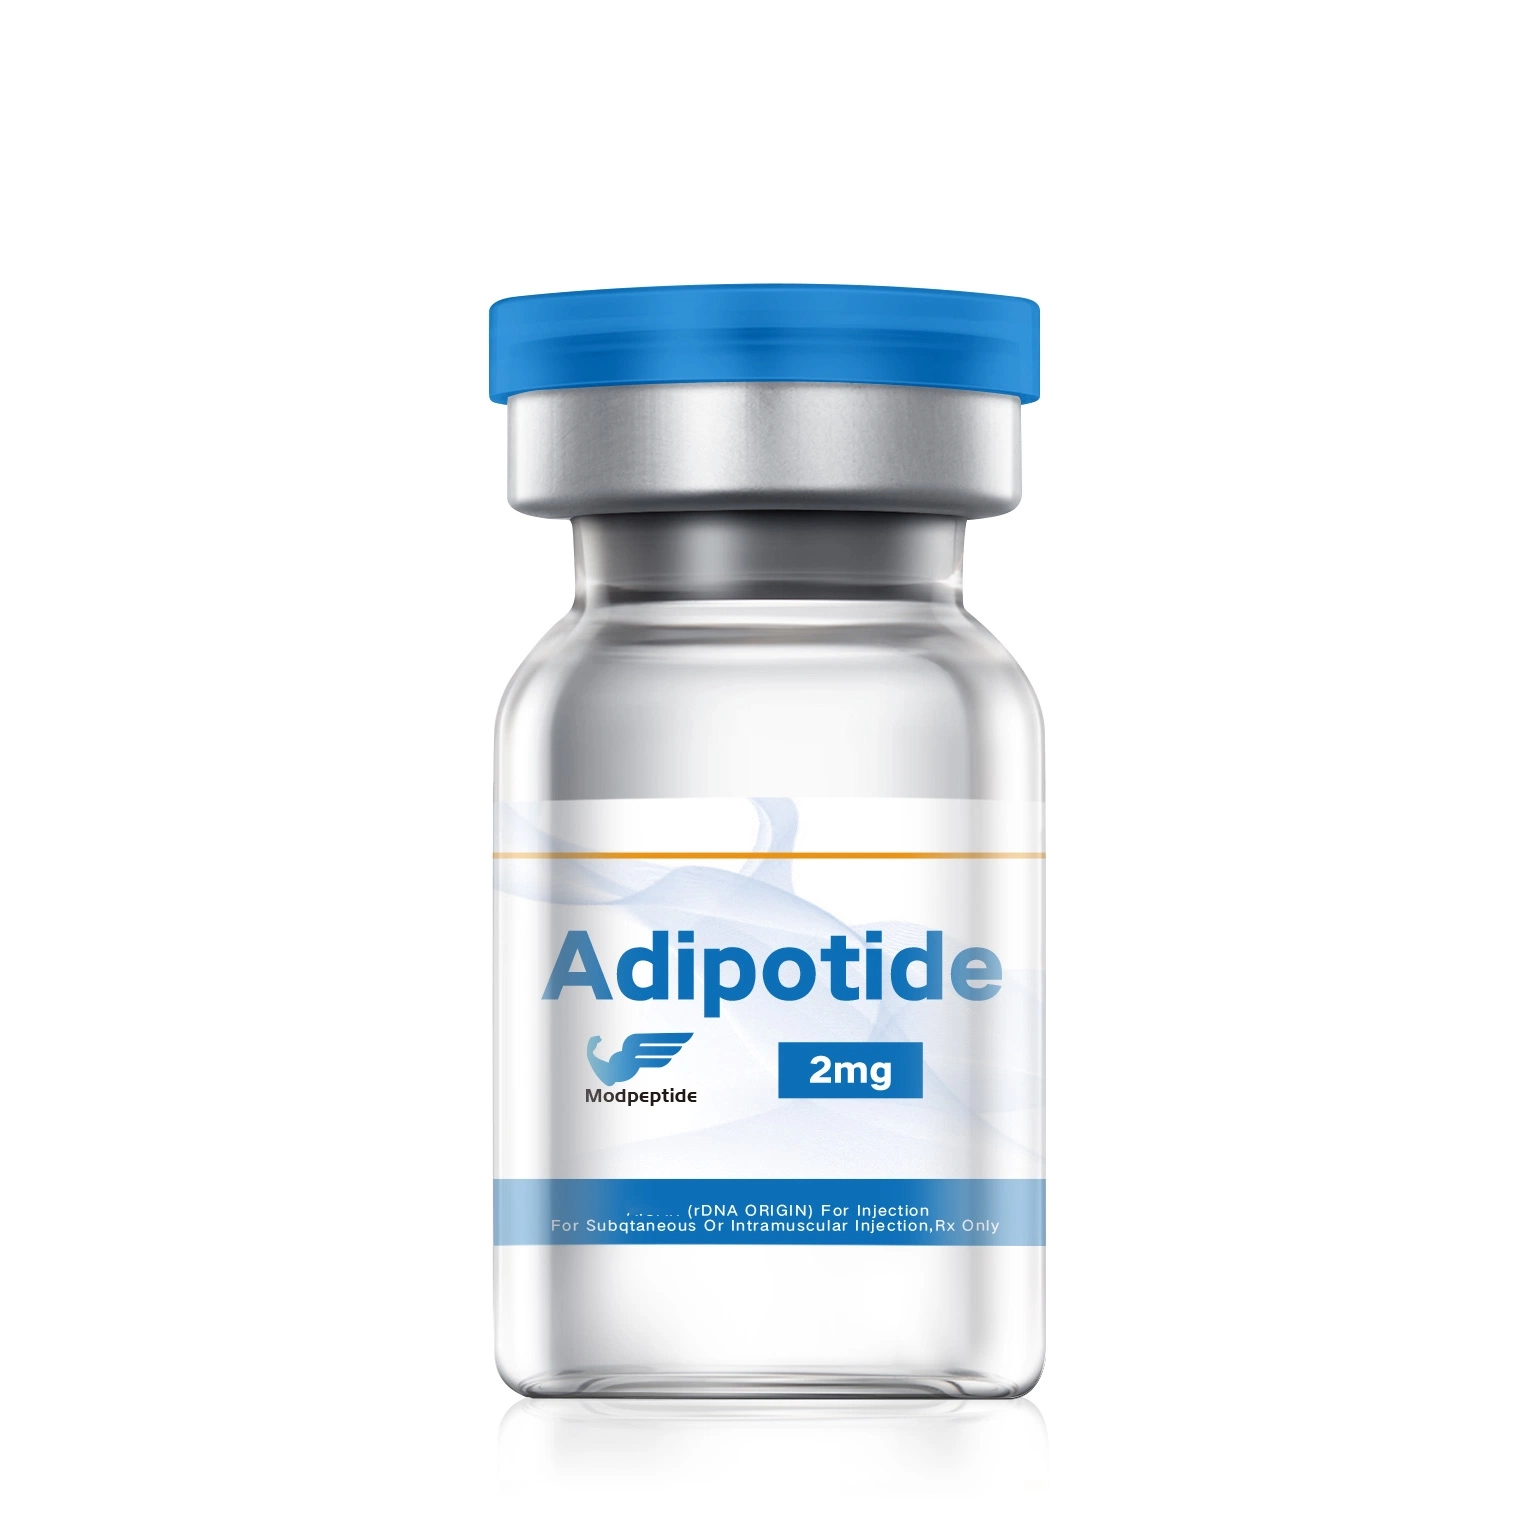 Péptidos de FTPP liofilizados de alta pureza Adipotide Construcción muscular pérdida de peso Péptidos Semaglutida al por mayor